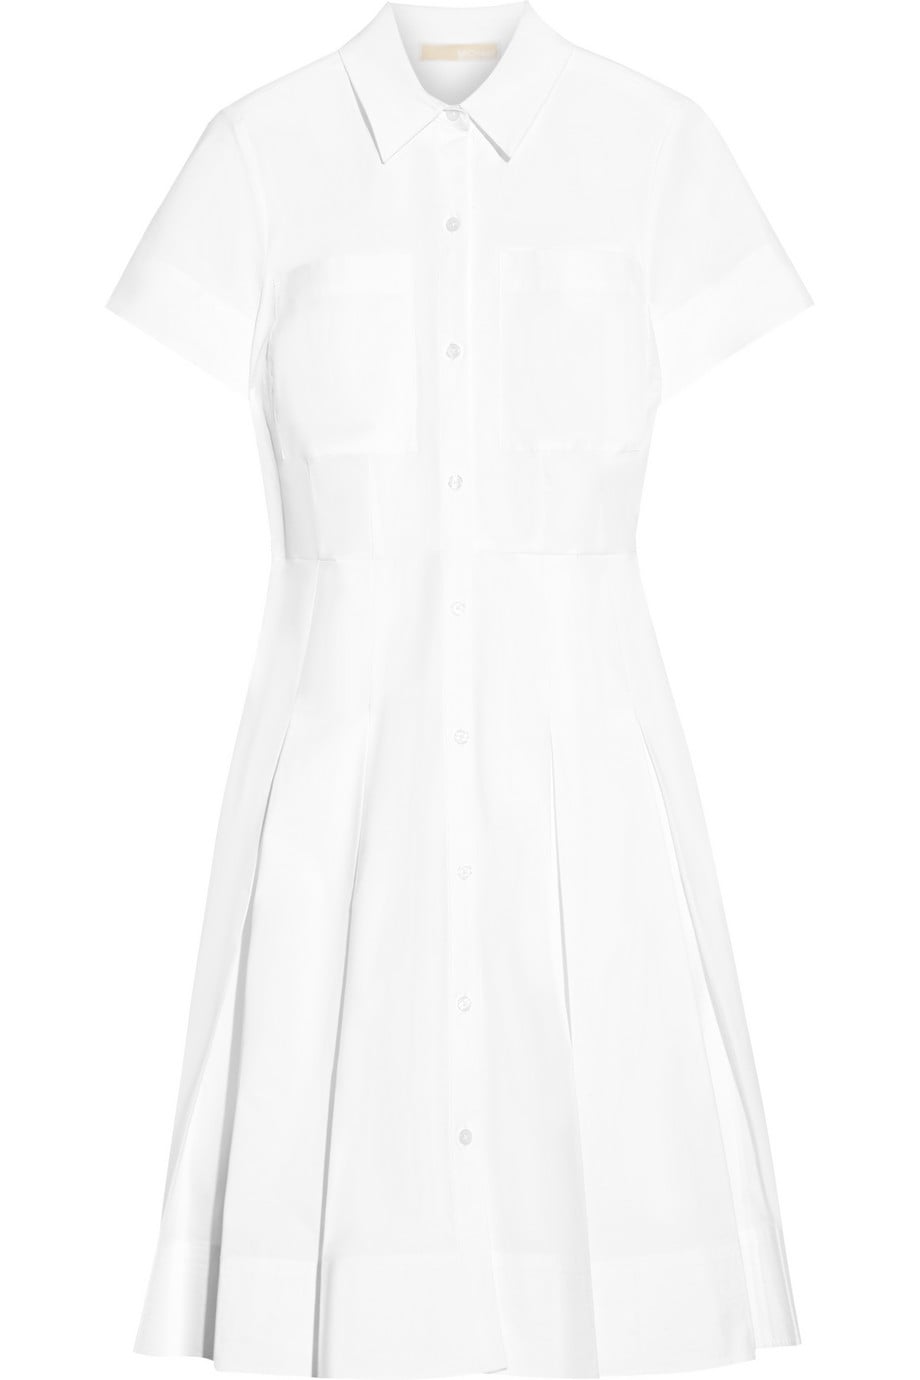 Chia sẻ 61+ về michael kors white dress mới nhất - Du học Akina